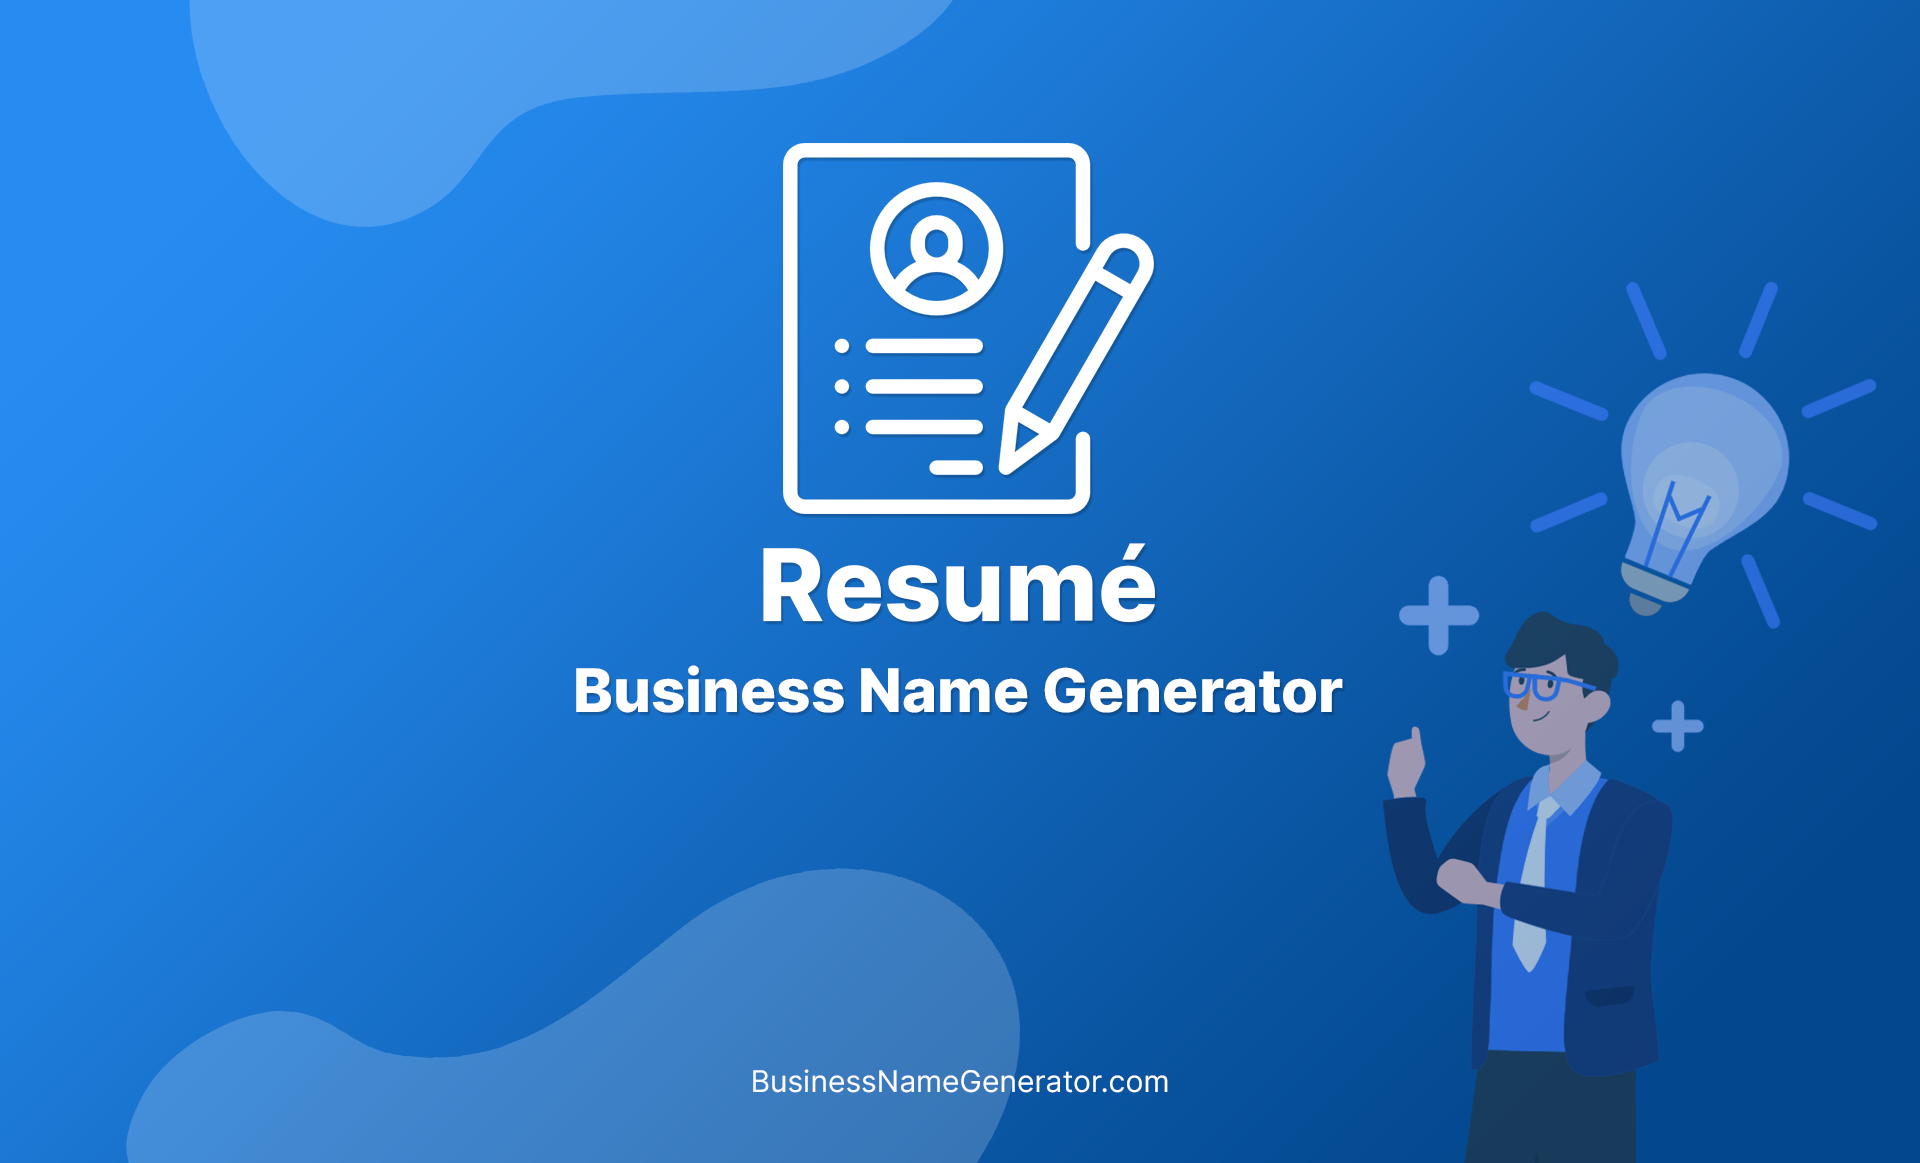 Resume Business Name Generator